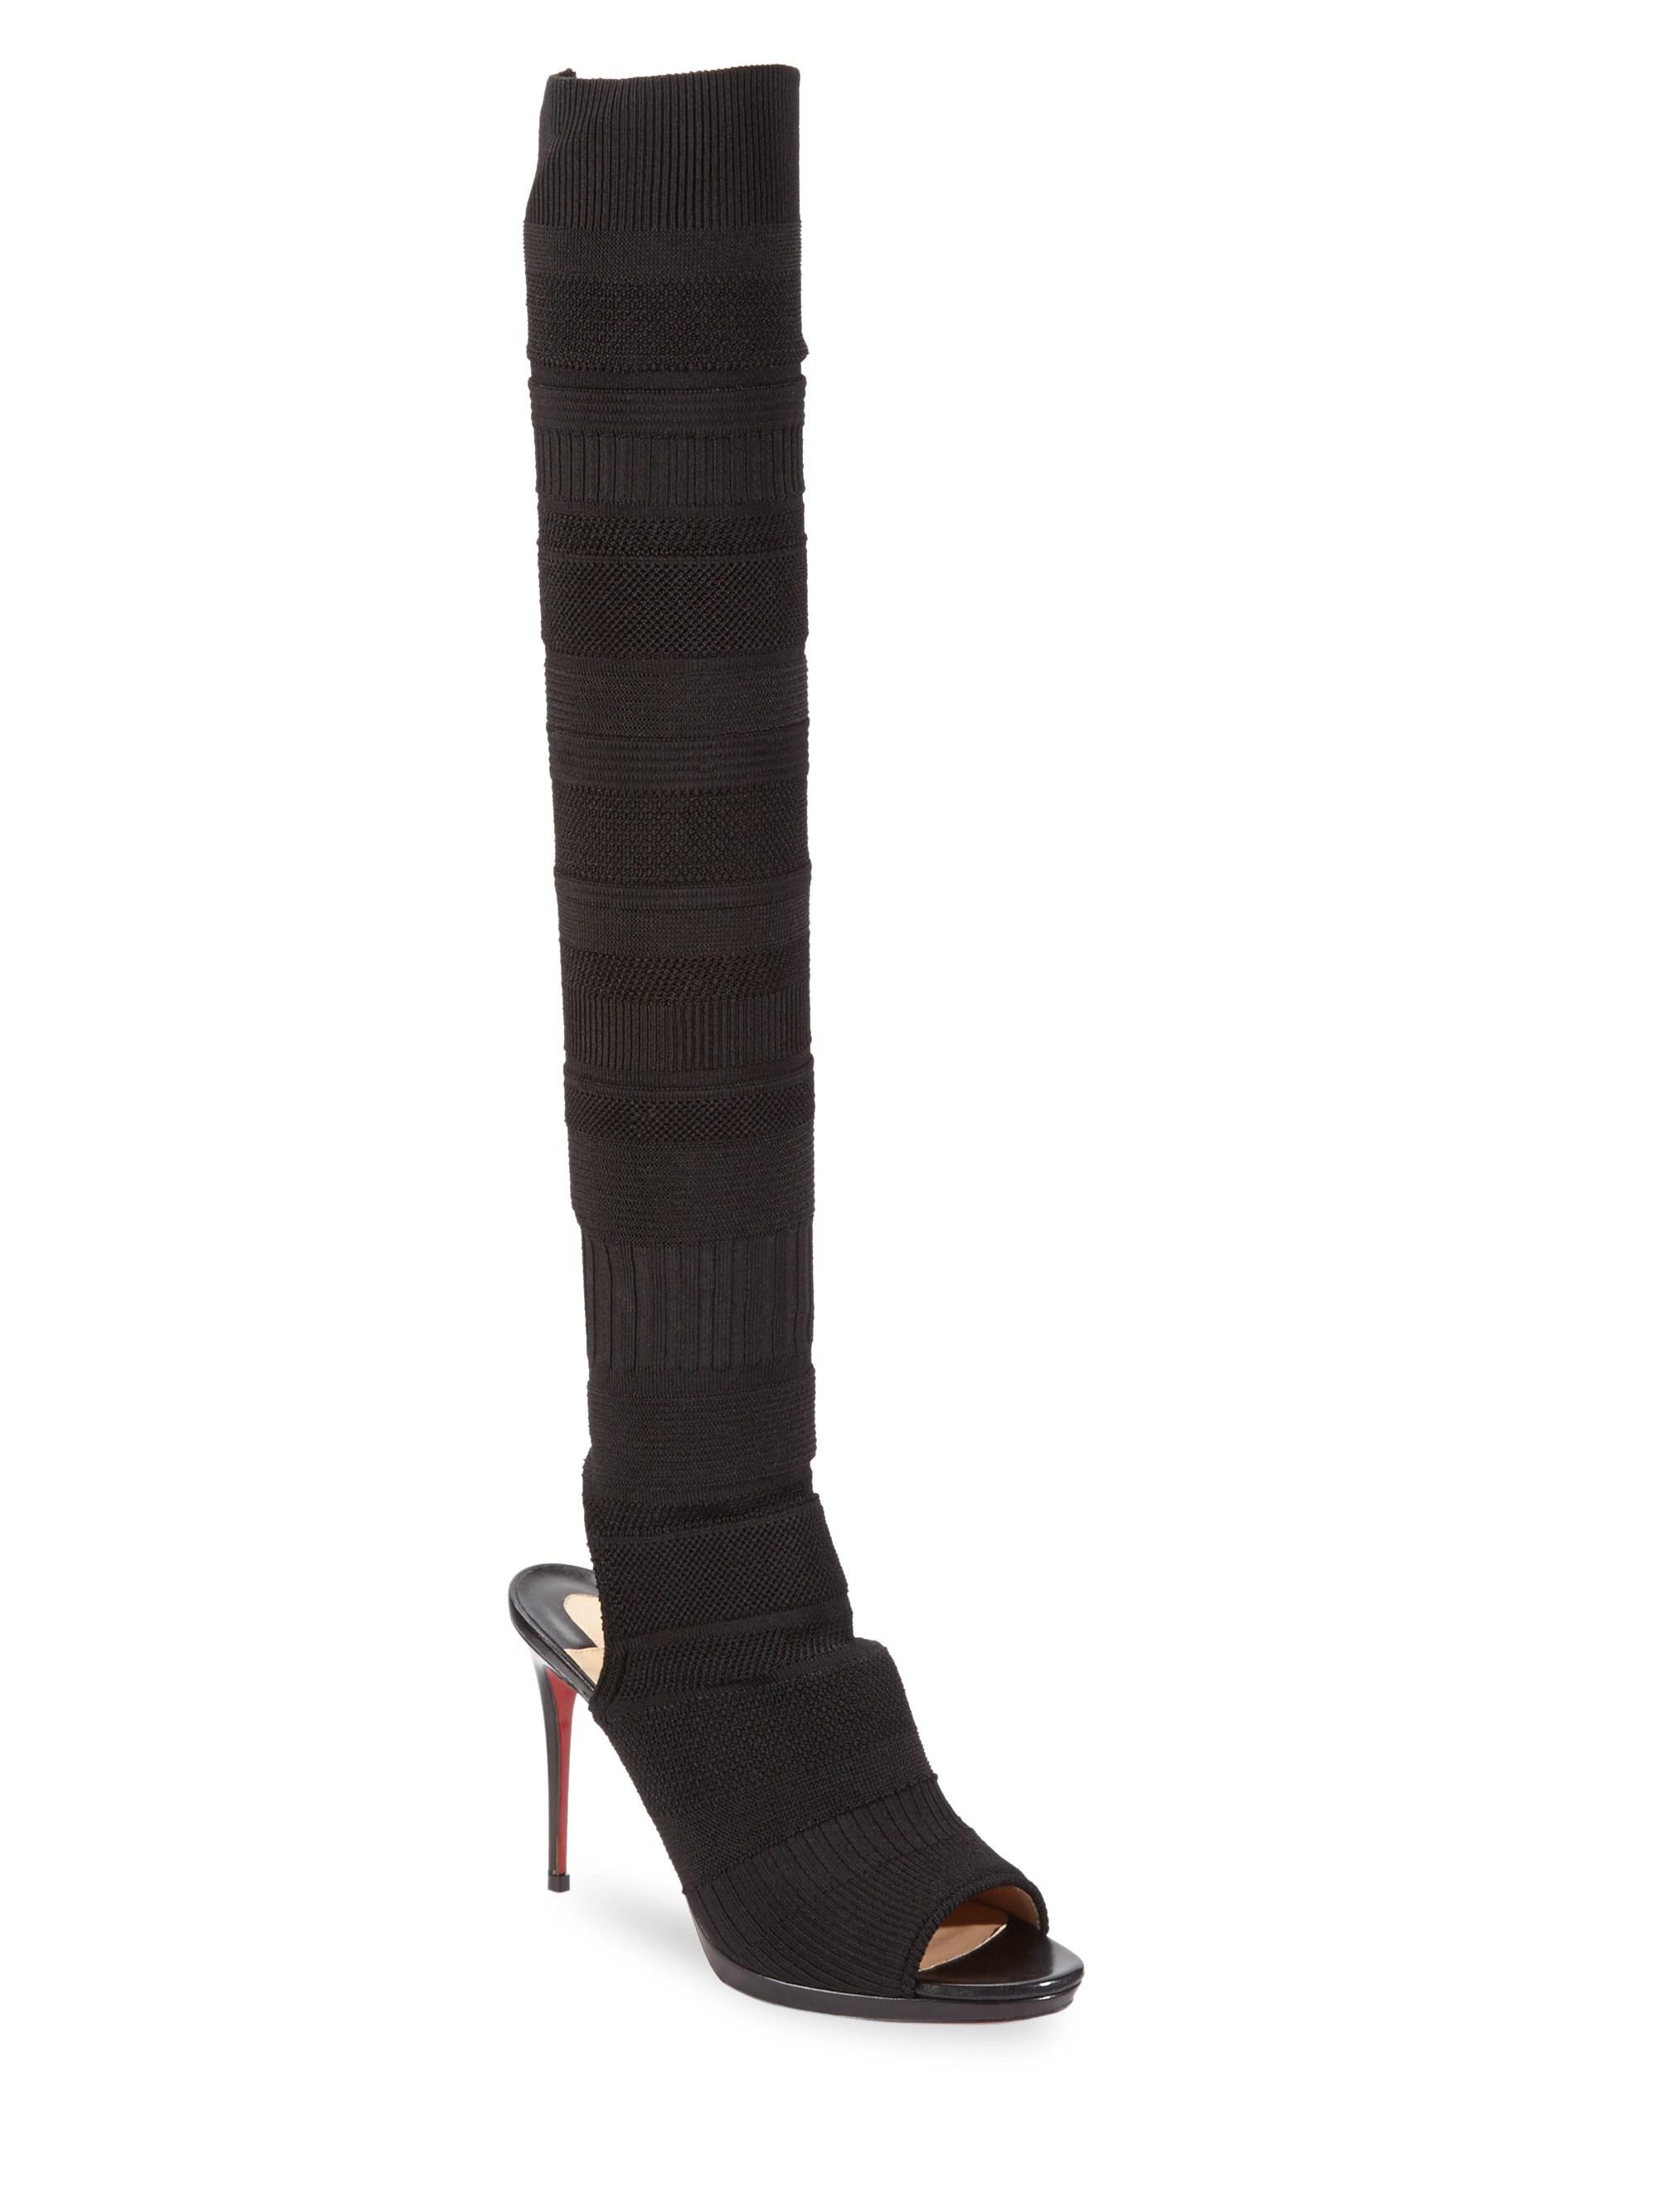 Christian Louboutin Cheminetta 120 Knee-high Peep-toe Boots in Black | Lyst